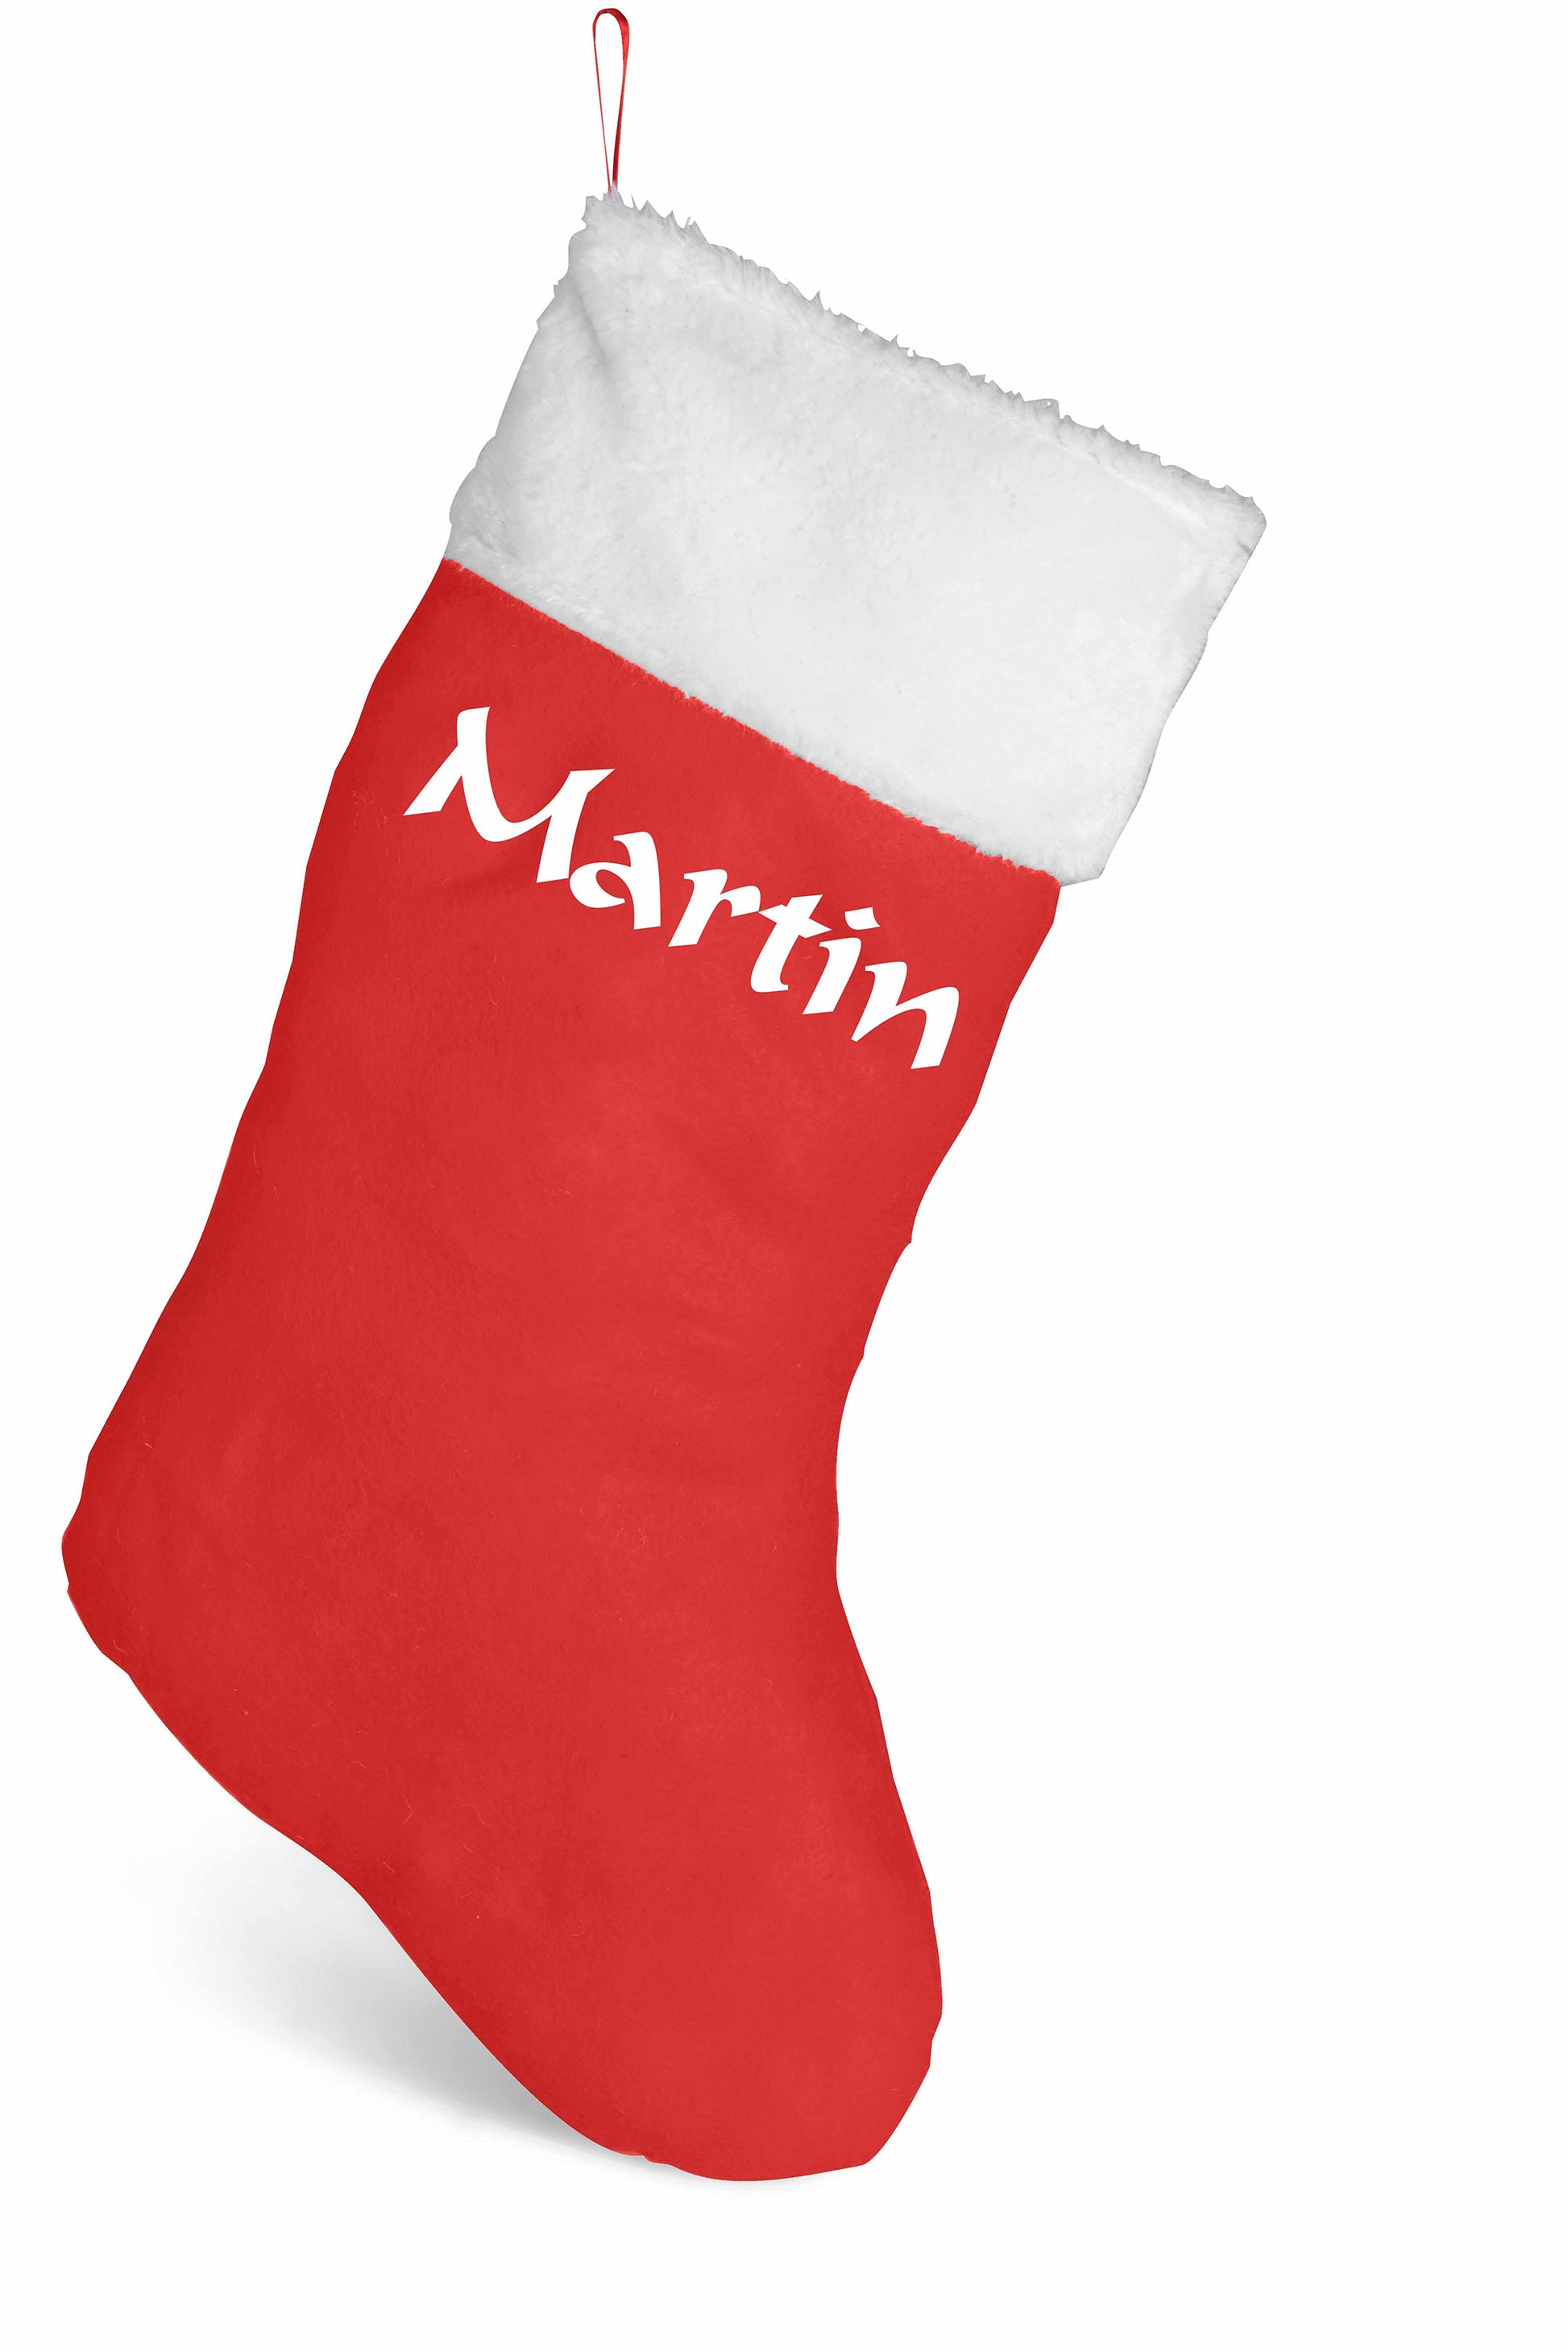 Personalised Christmas stocking